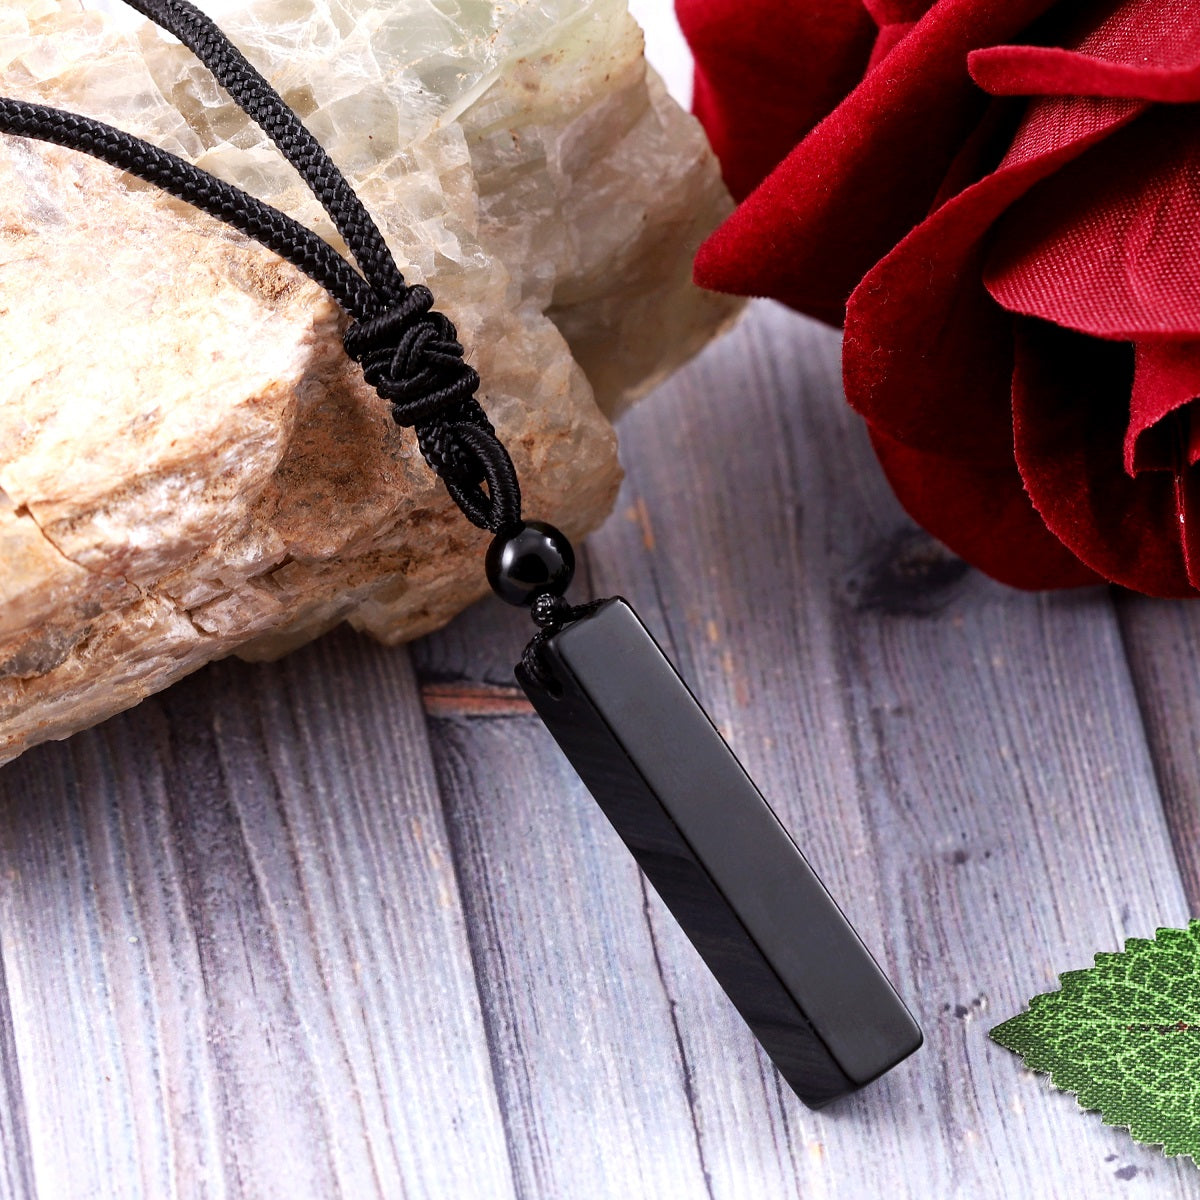 Delicate rope-wrapped design showcasing the Black Onyx gemstone pendant